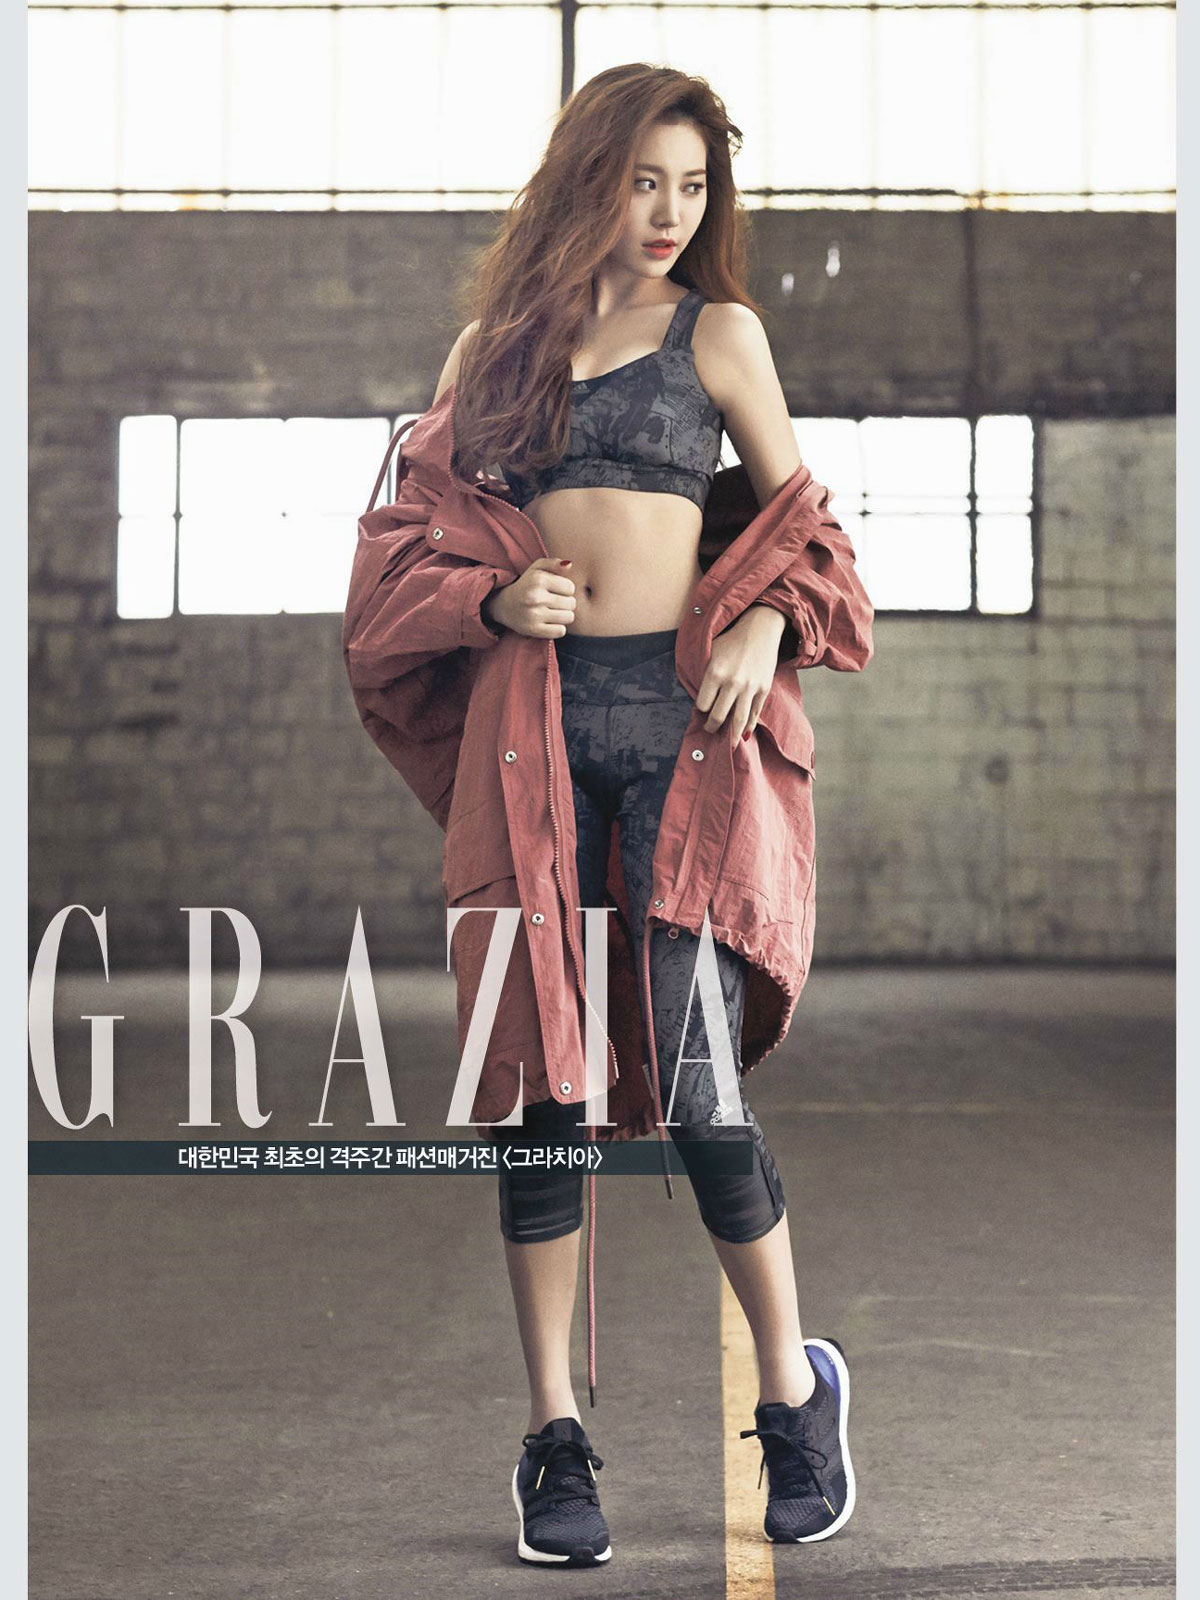 Kim Yura Adidas Korean Grazia Magazine